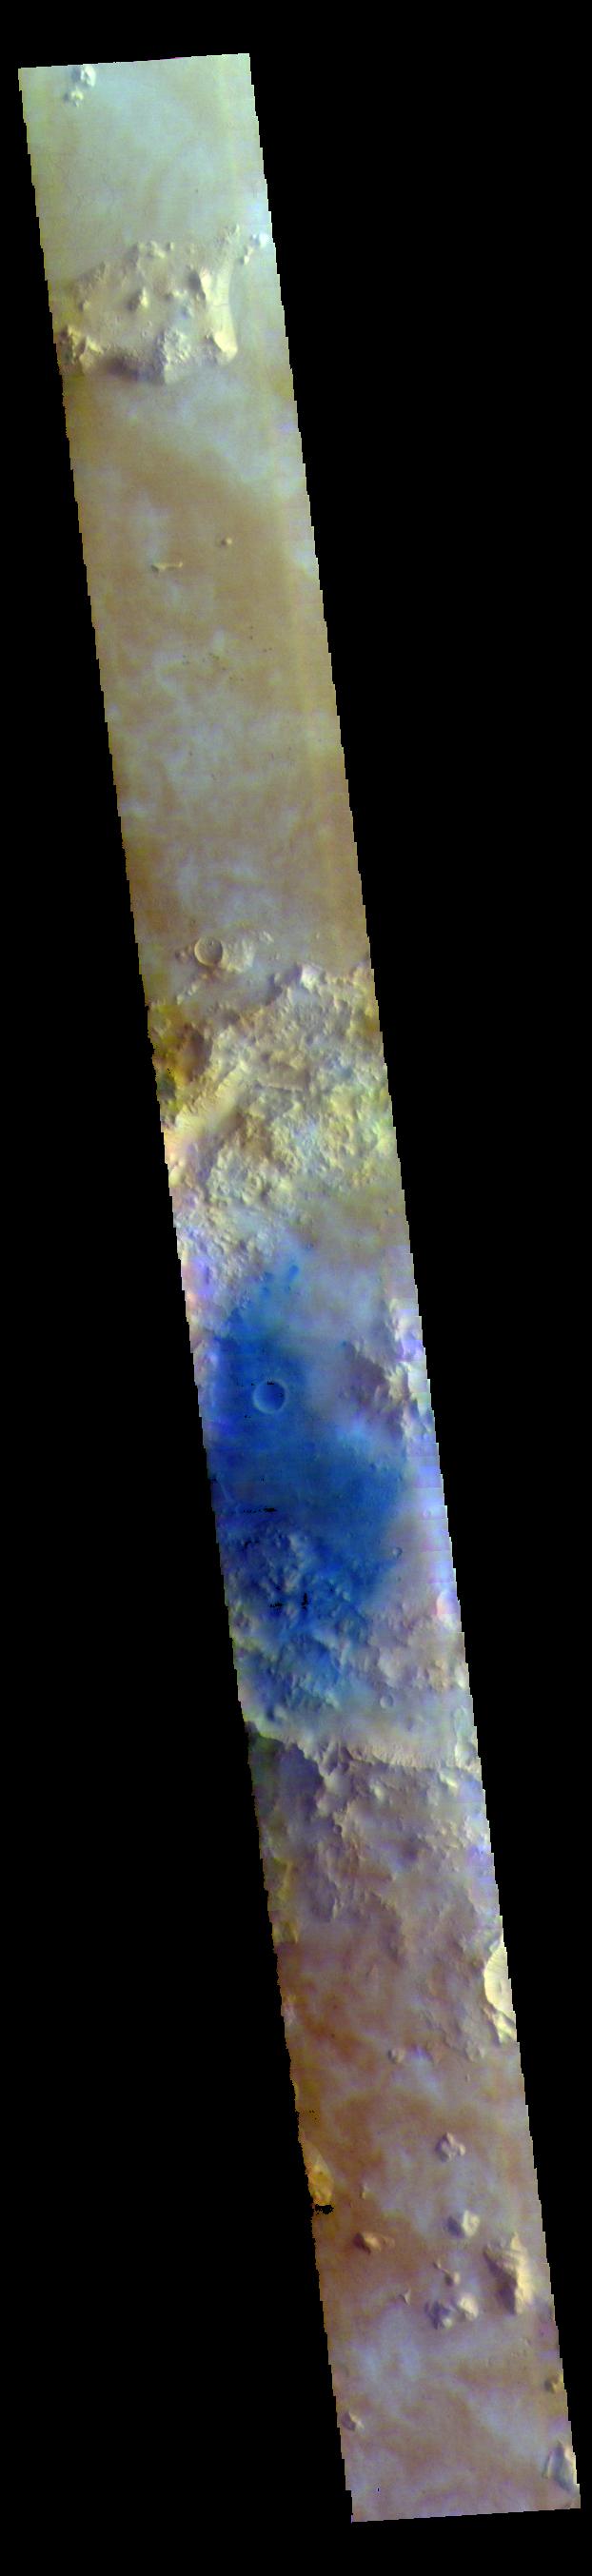 PIA22718: Tombaugh Crater - False Color